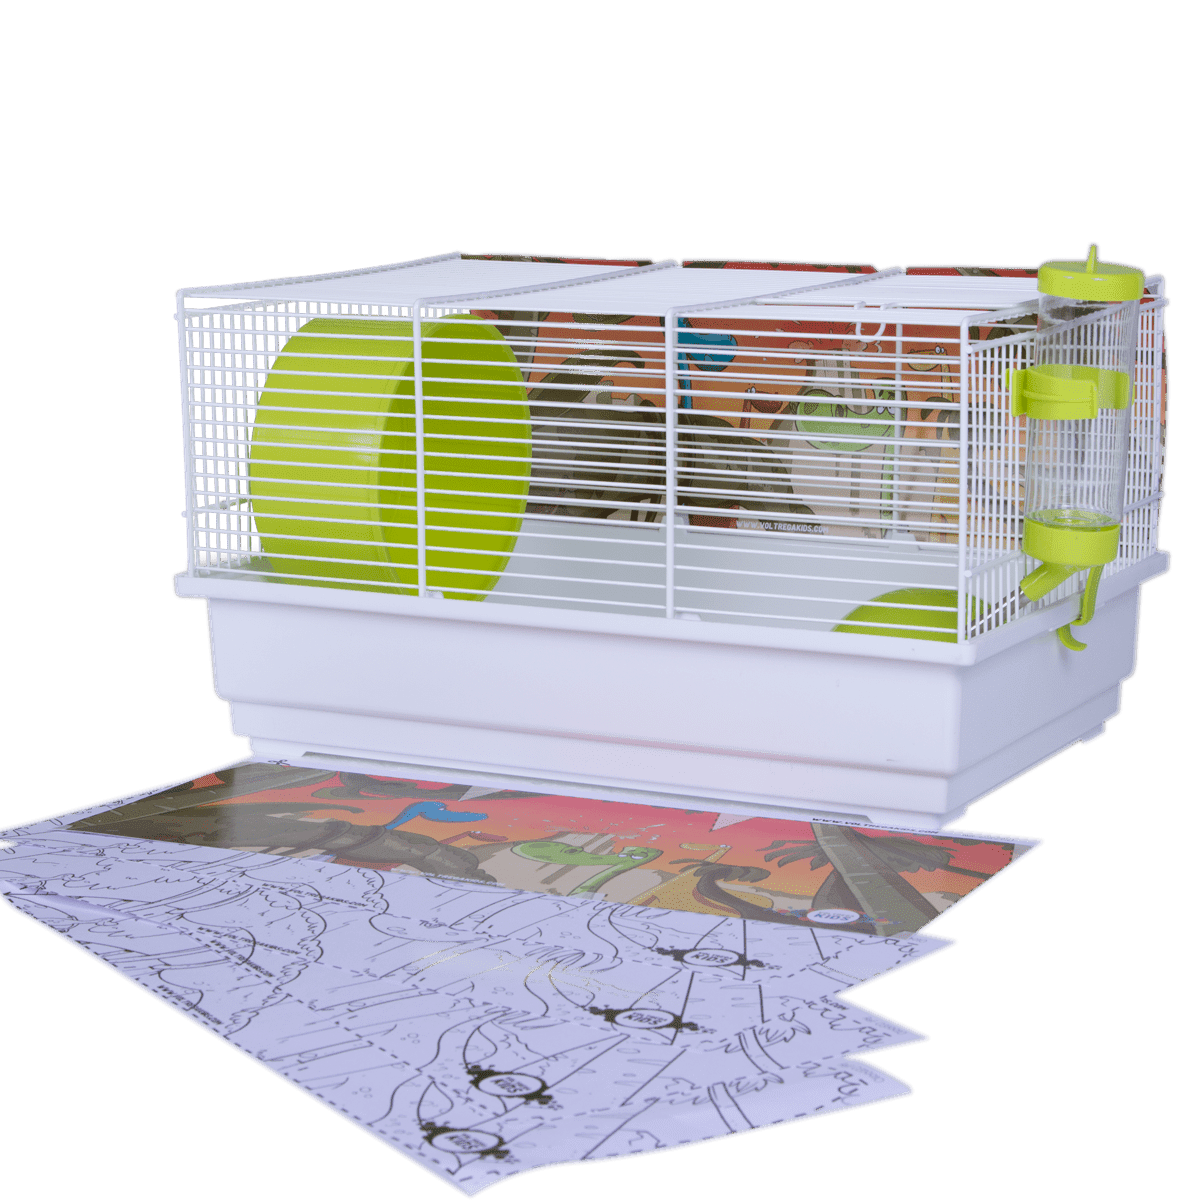 Voltrega Spain Hamster Kit 113B + Paint Cut Dinos